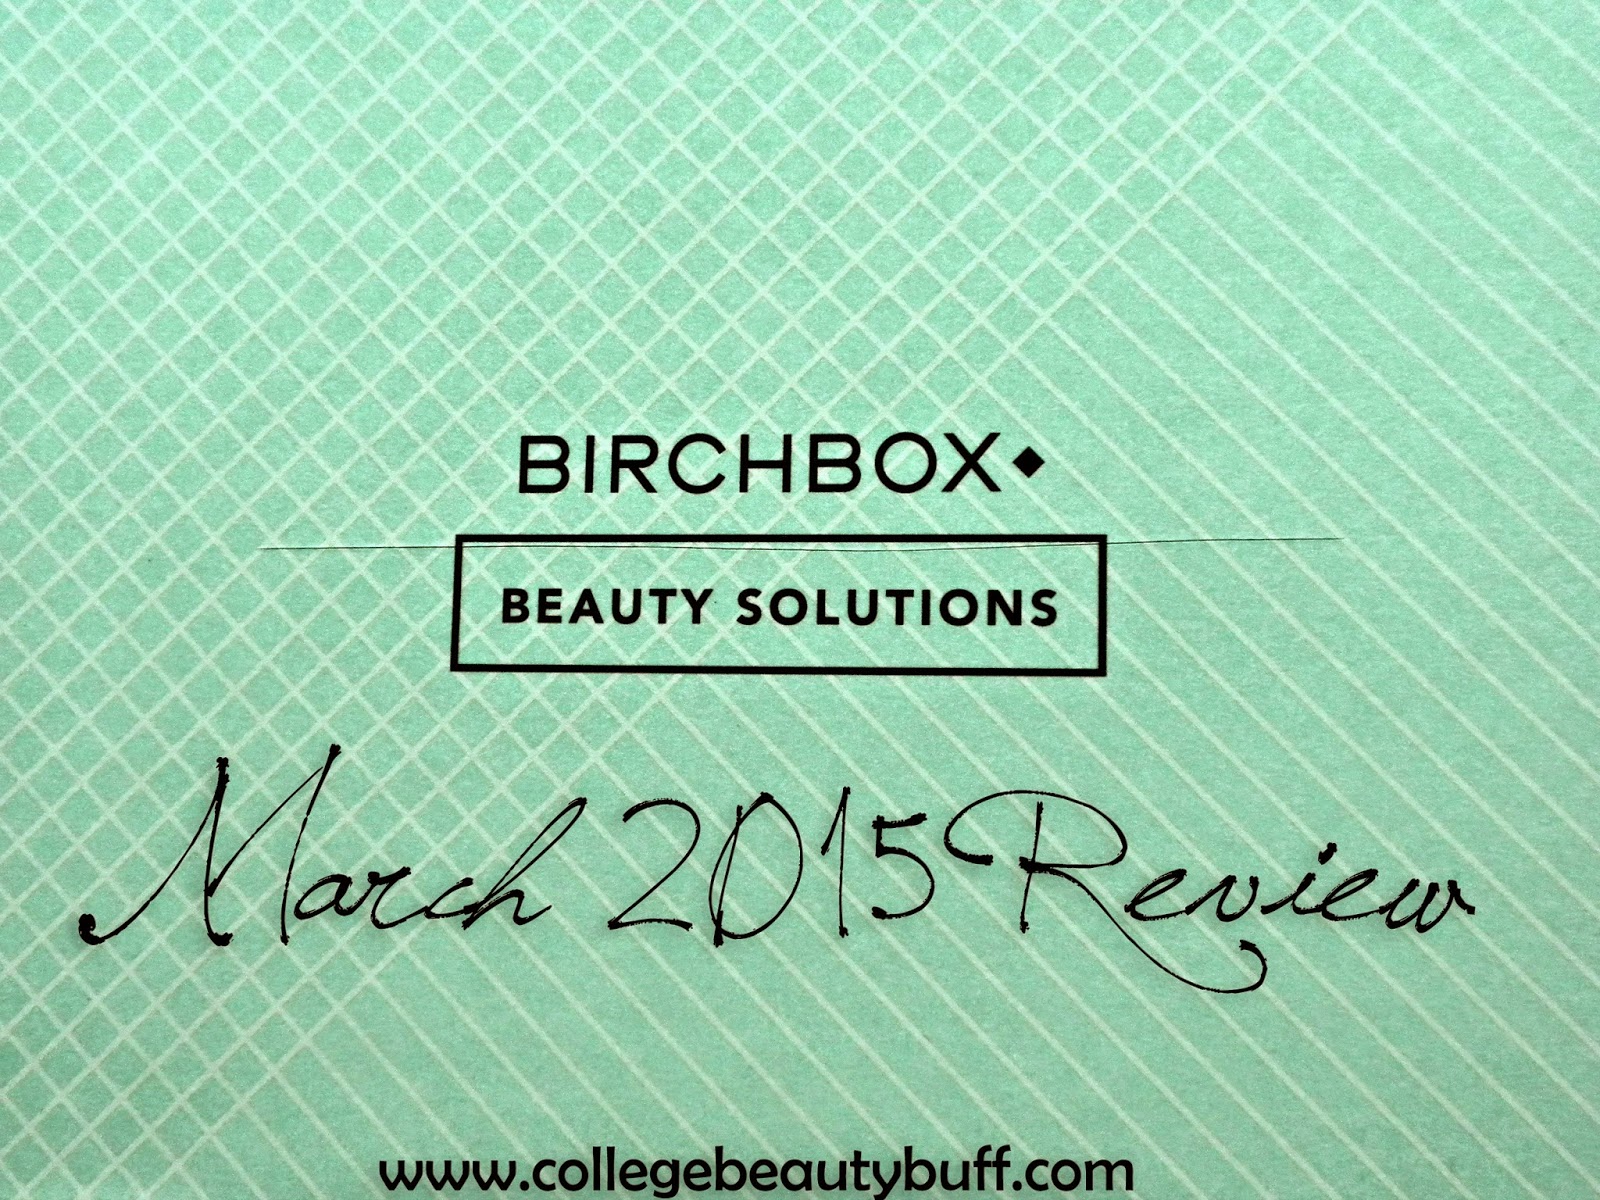 Birchbox: March 2015 Review